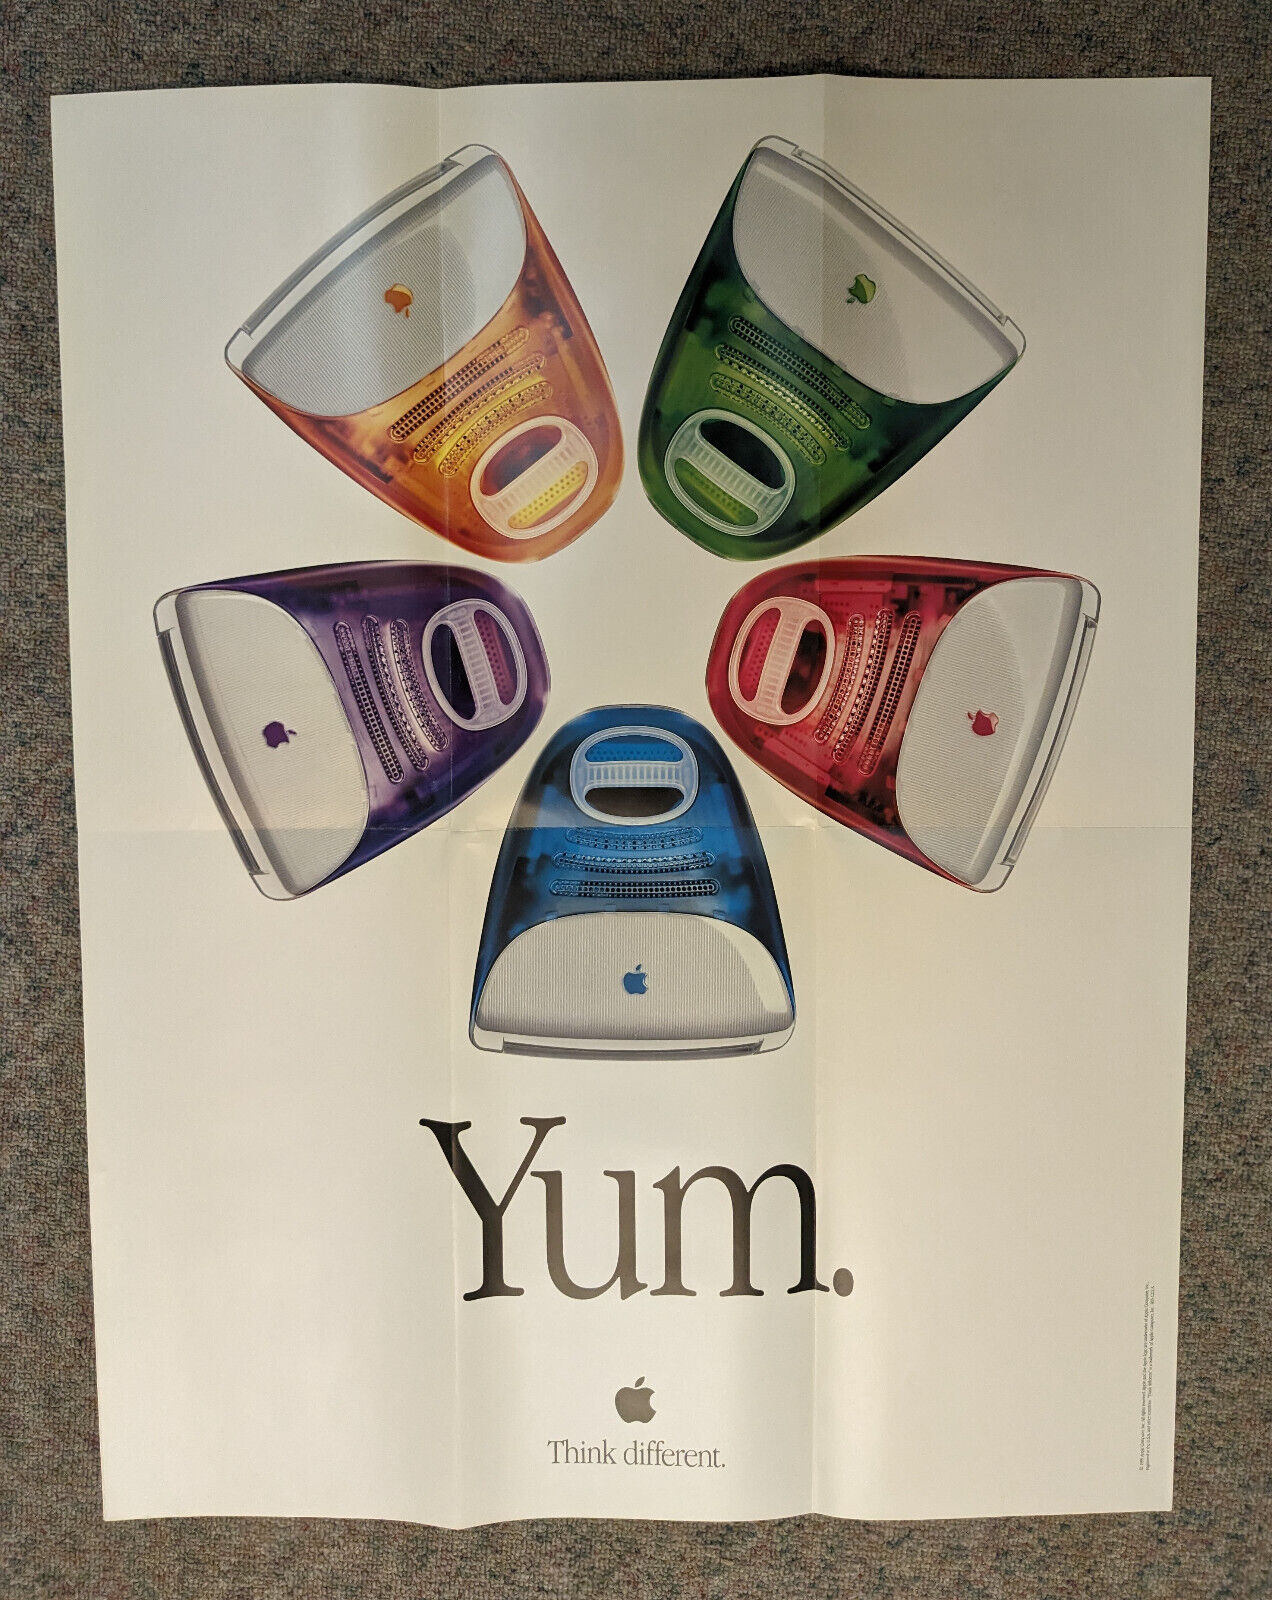 Vintage Original Apple Computer 5 flavors iMac G3 poster: Yum. Think Different.